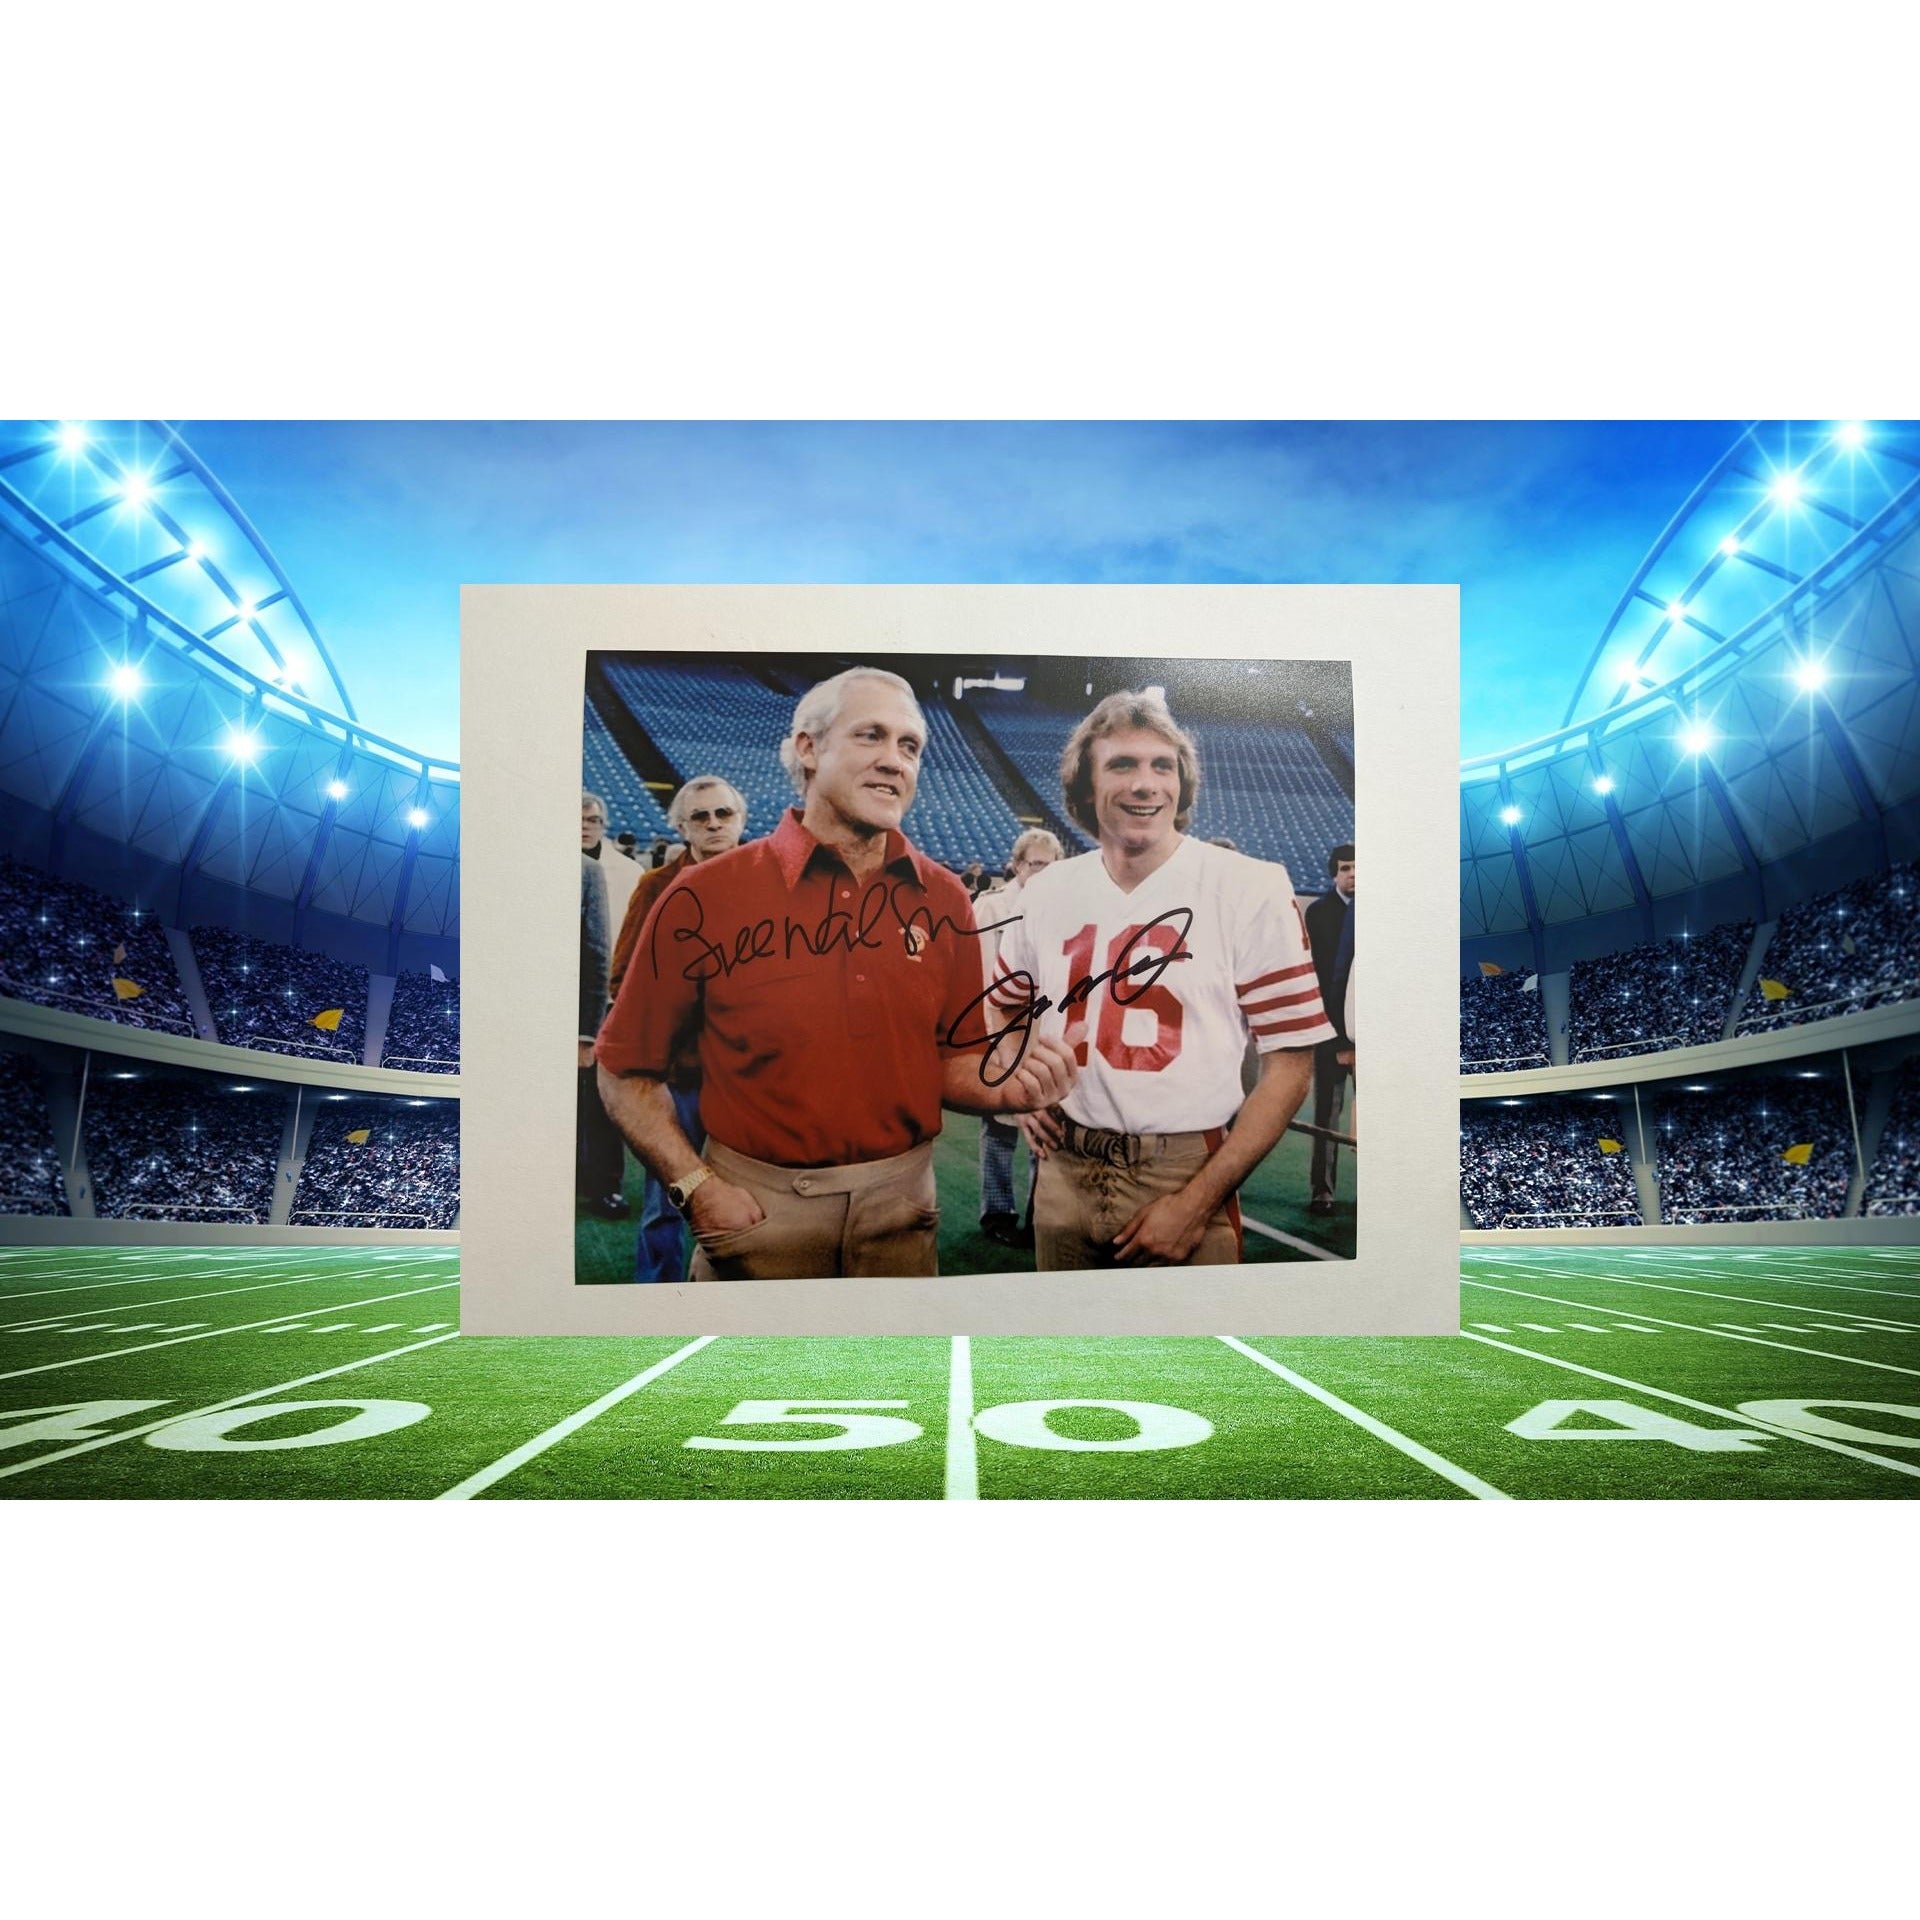 San Francisco 49ers Joe Montana and Bill Walsh 8x10 photo signed with proof